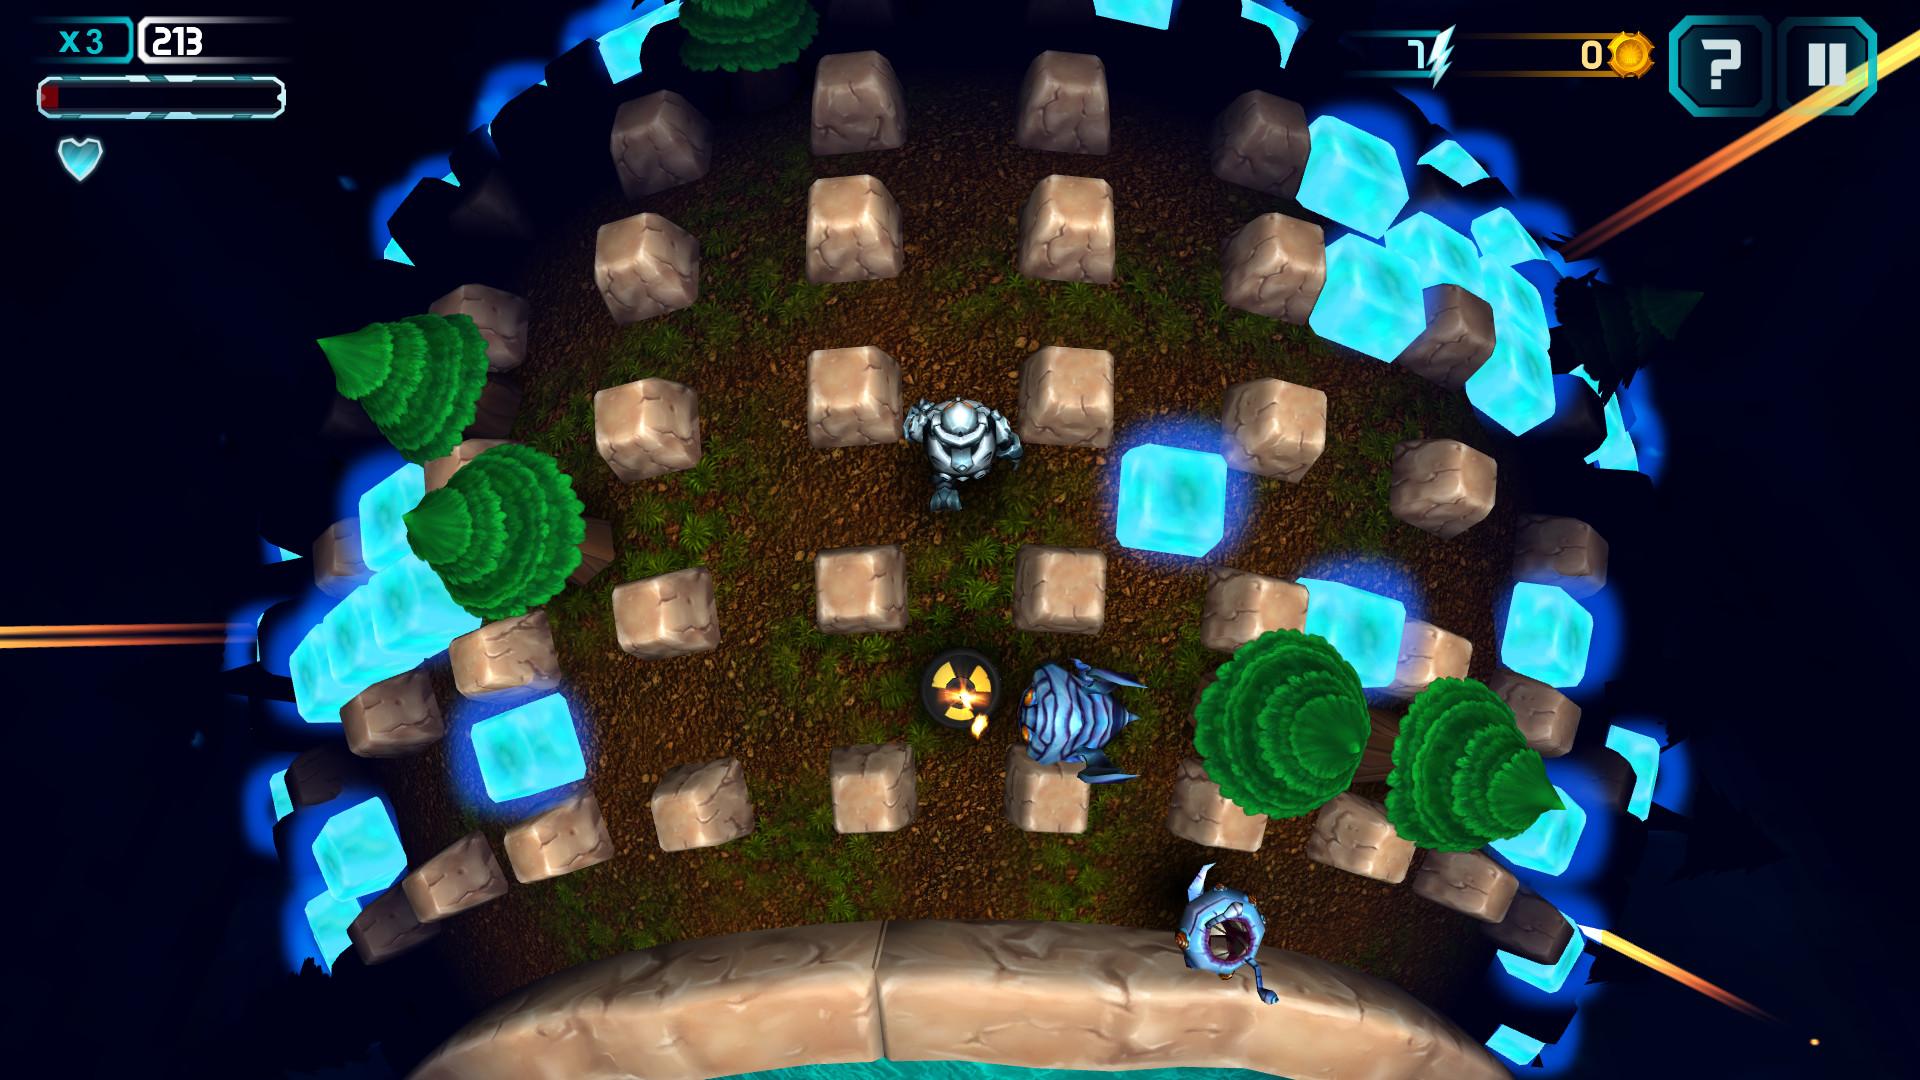 Screenshot №8 from game BomberZone